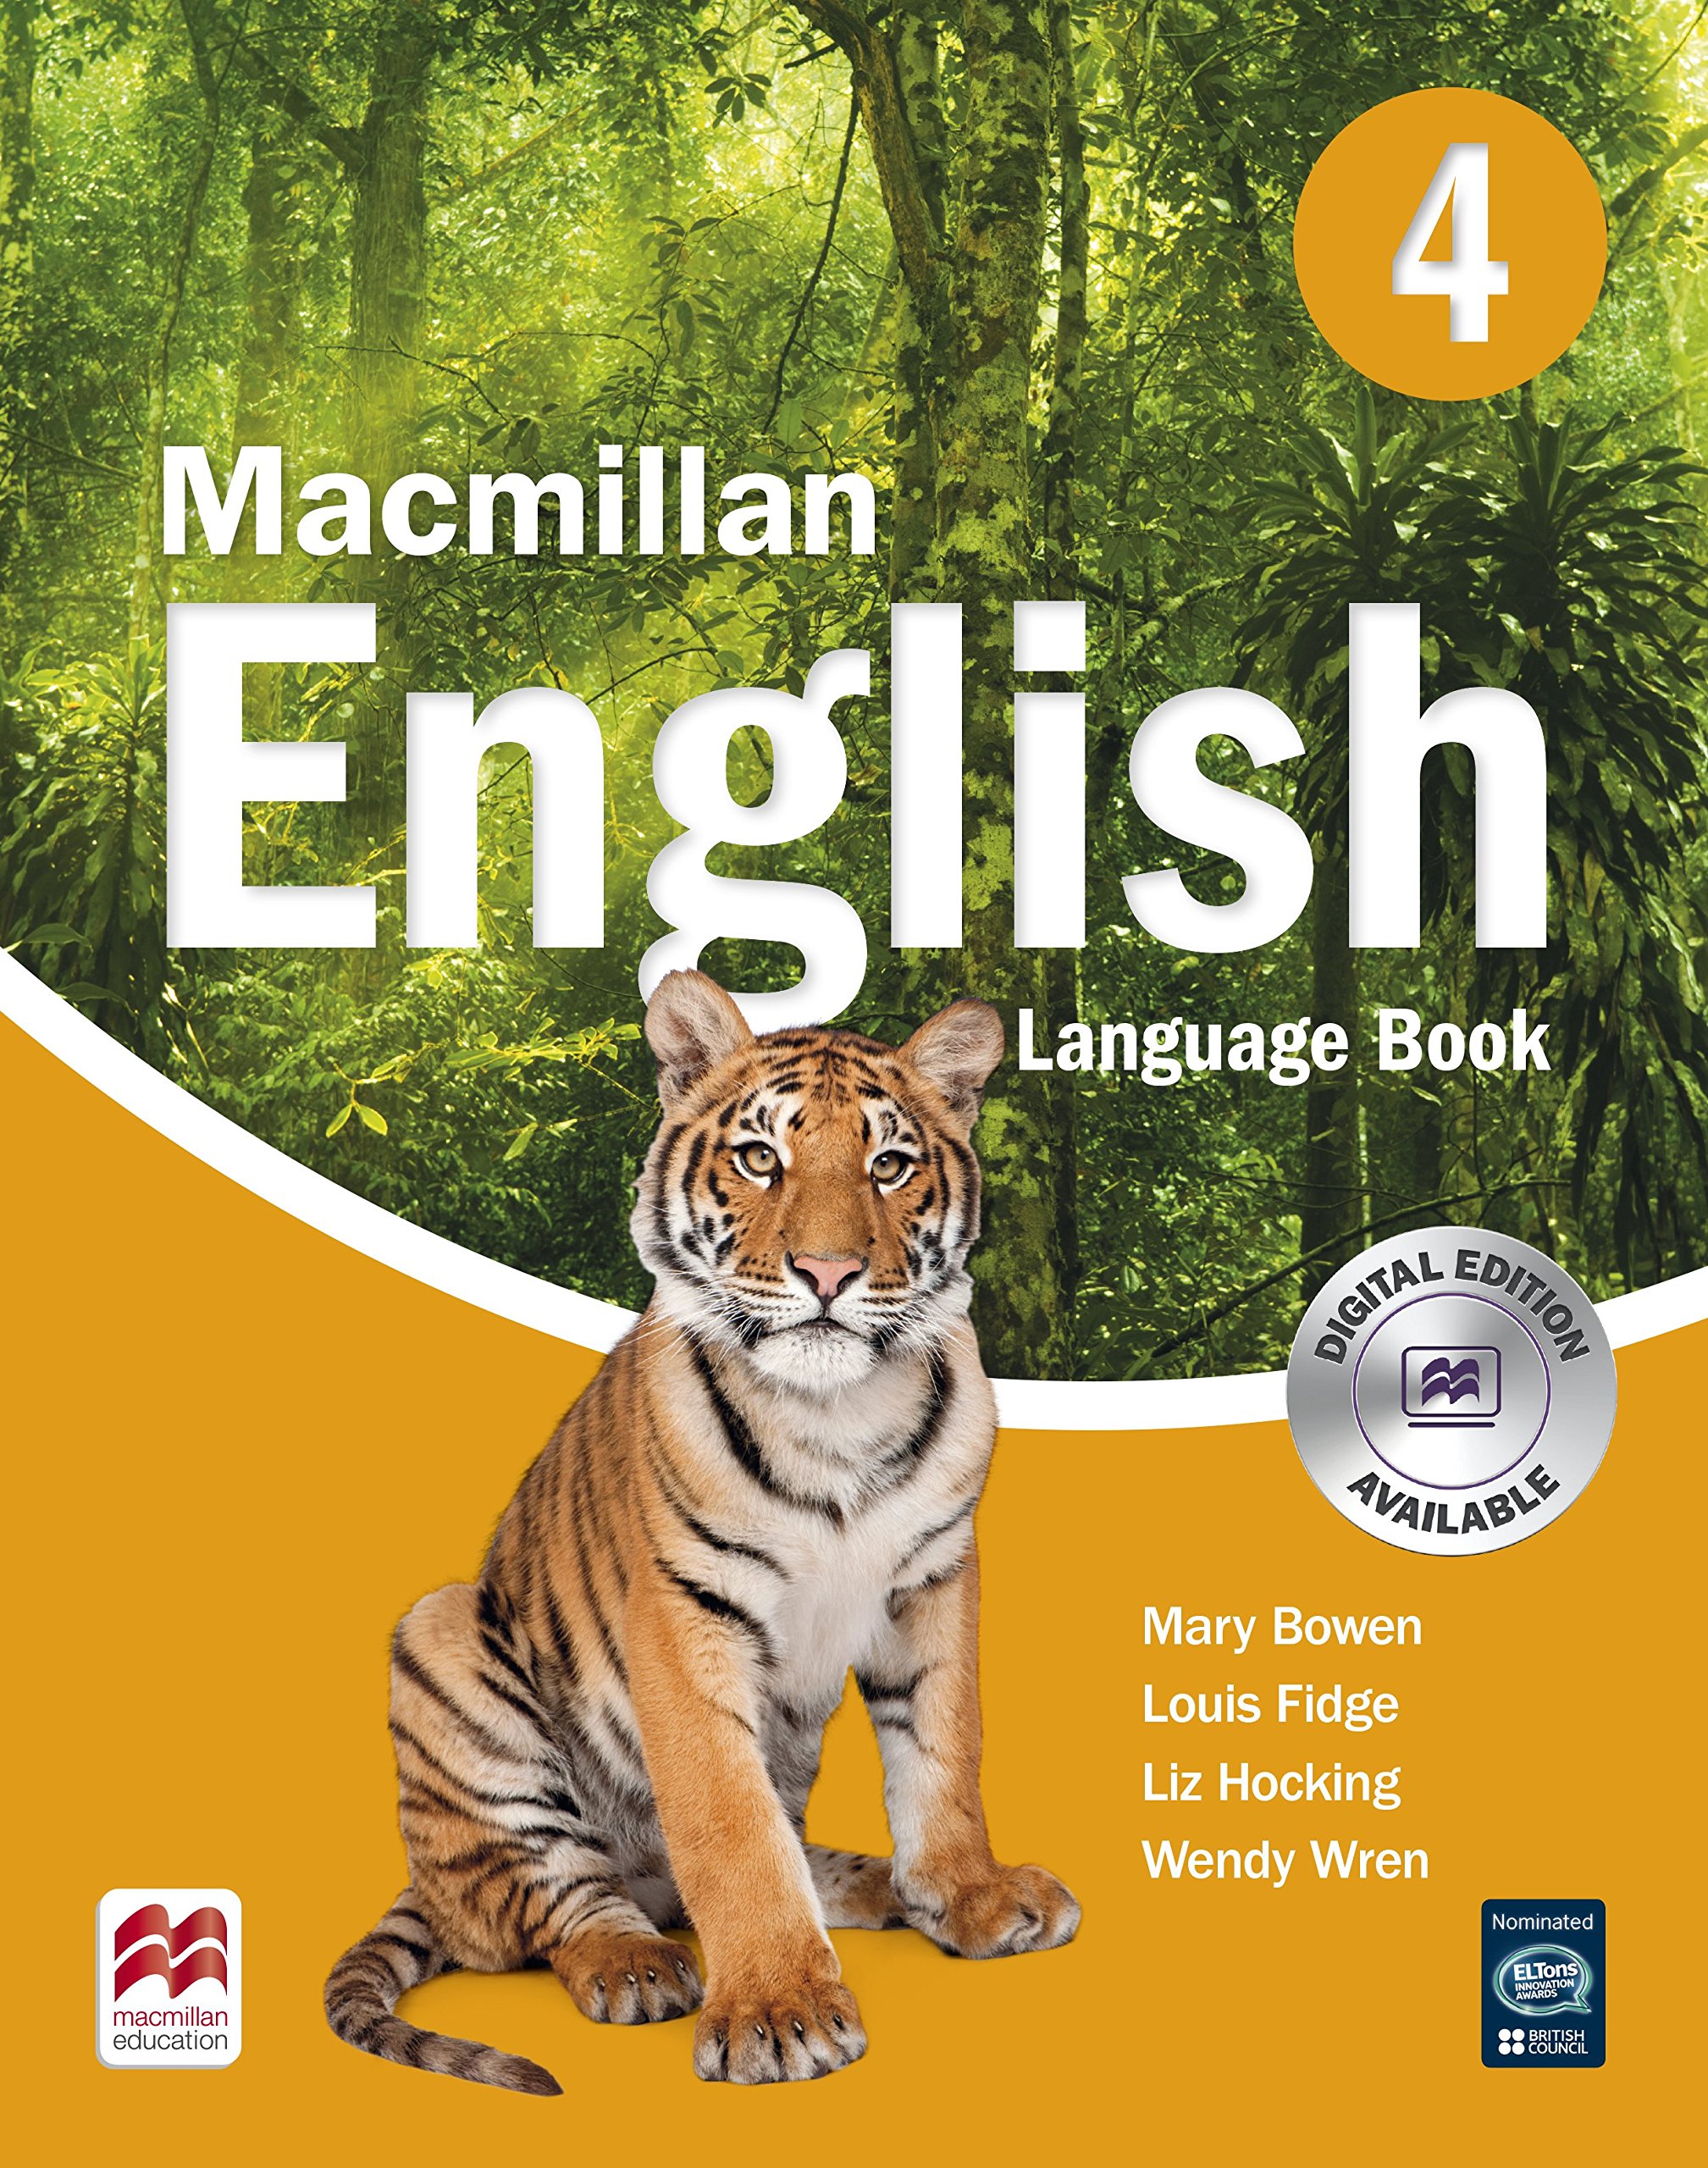 Macmillan English 4 - Language Book